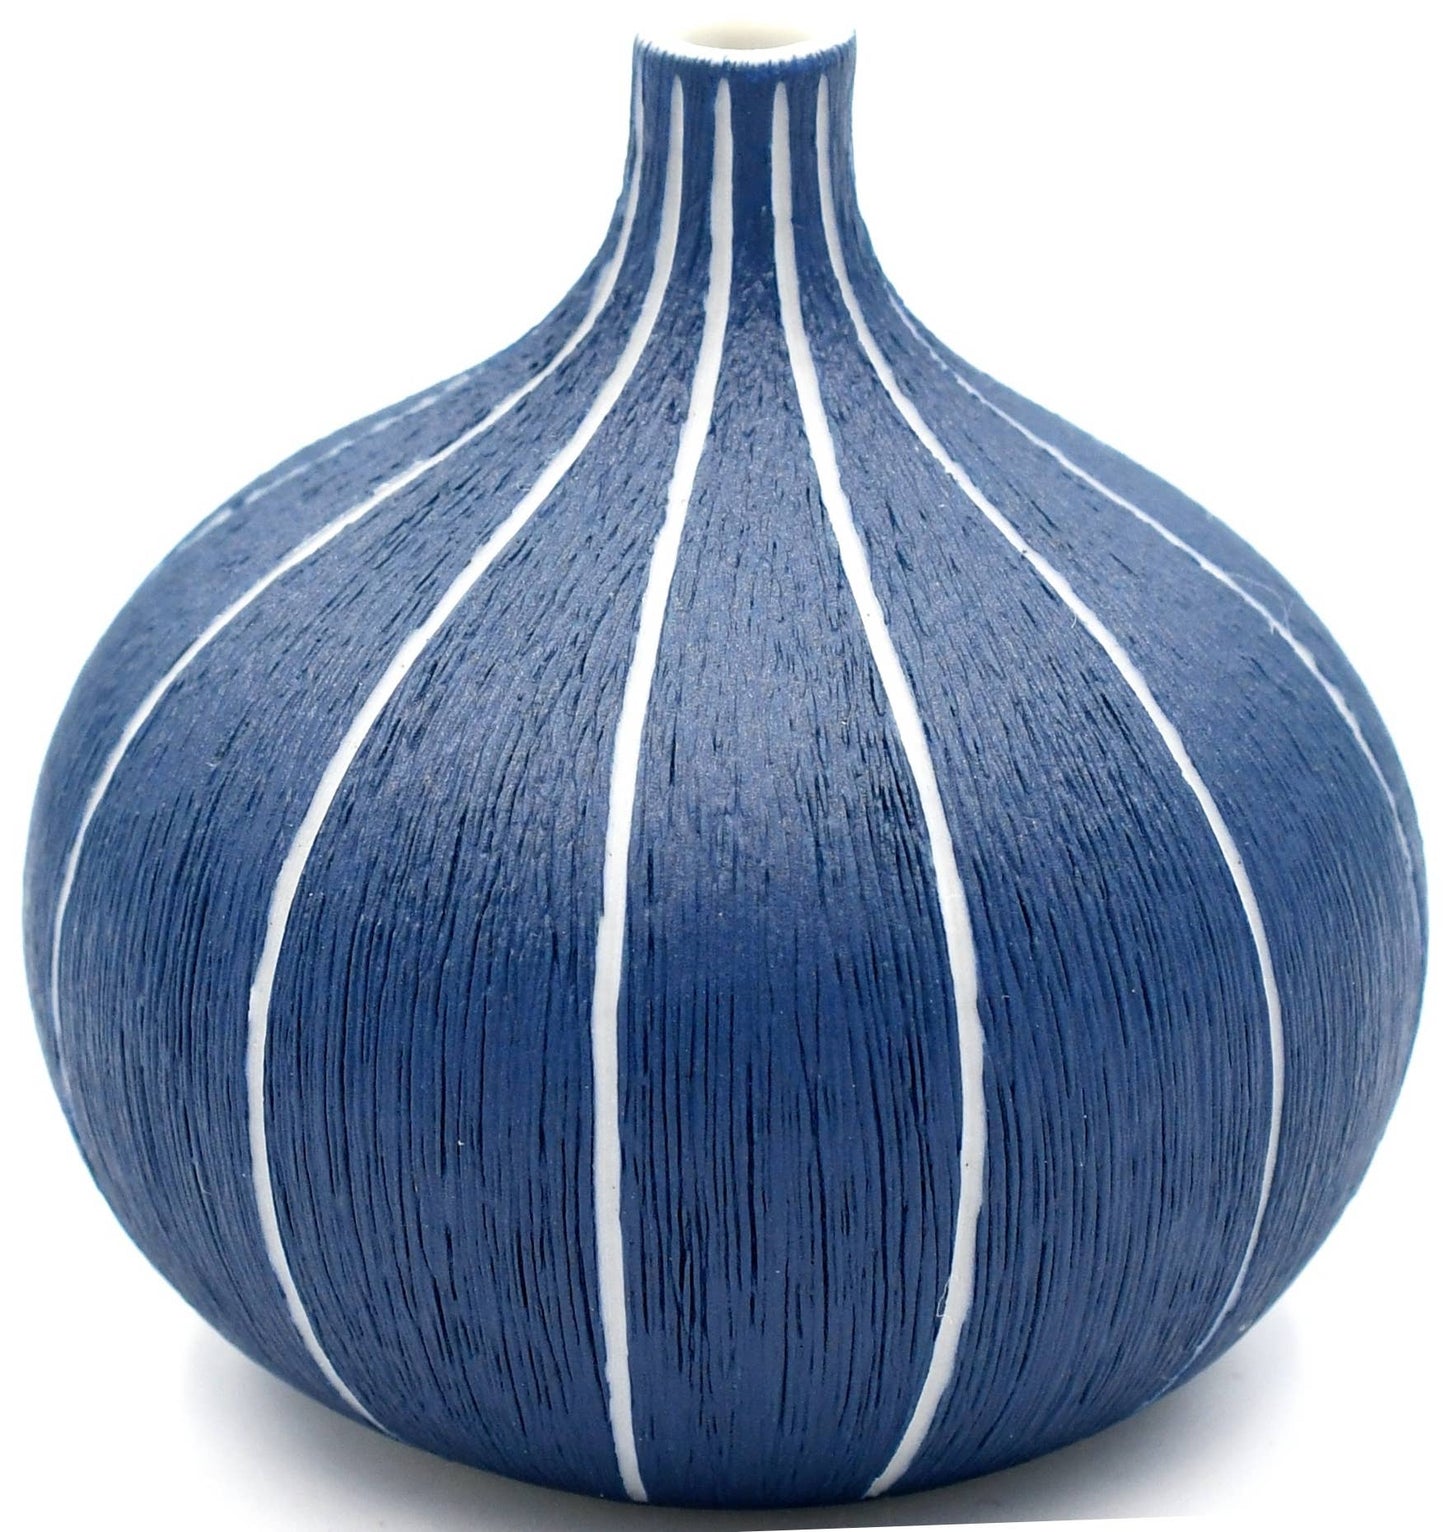 Art Floral Trading LLC - 192BLUE17 CONGO TINY S - BLUE17 Porcelain bud vase